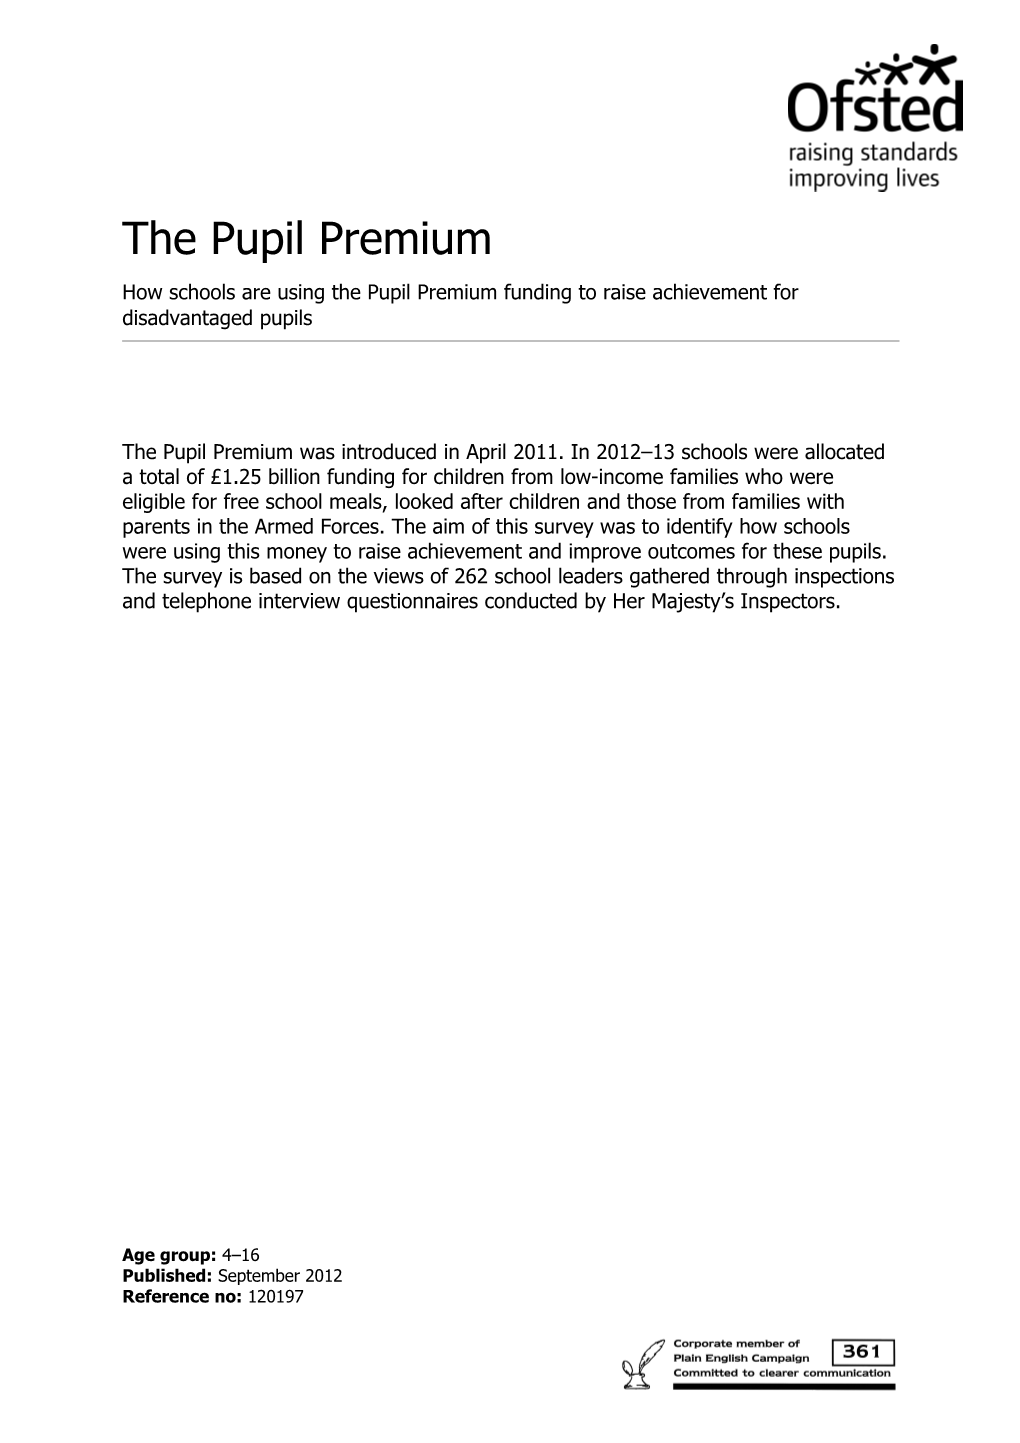 Part A: What Is the Pupil Premium?